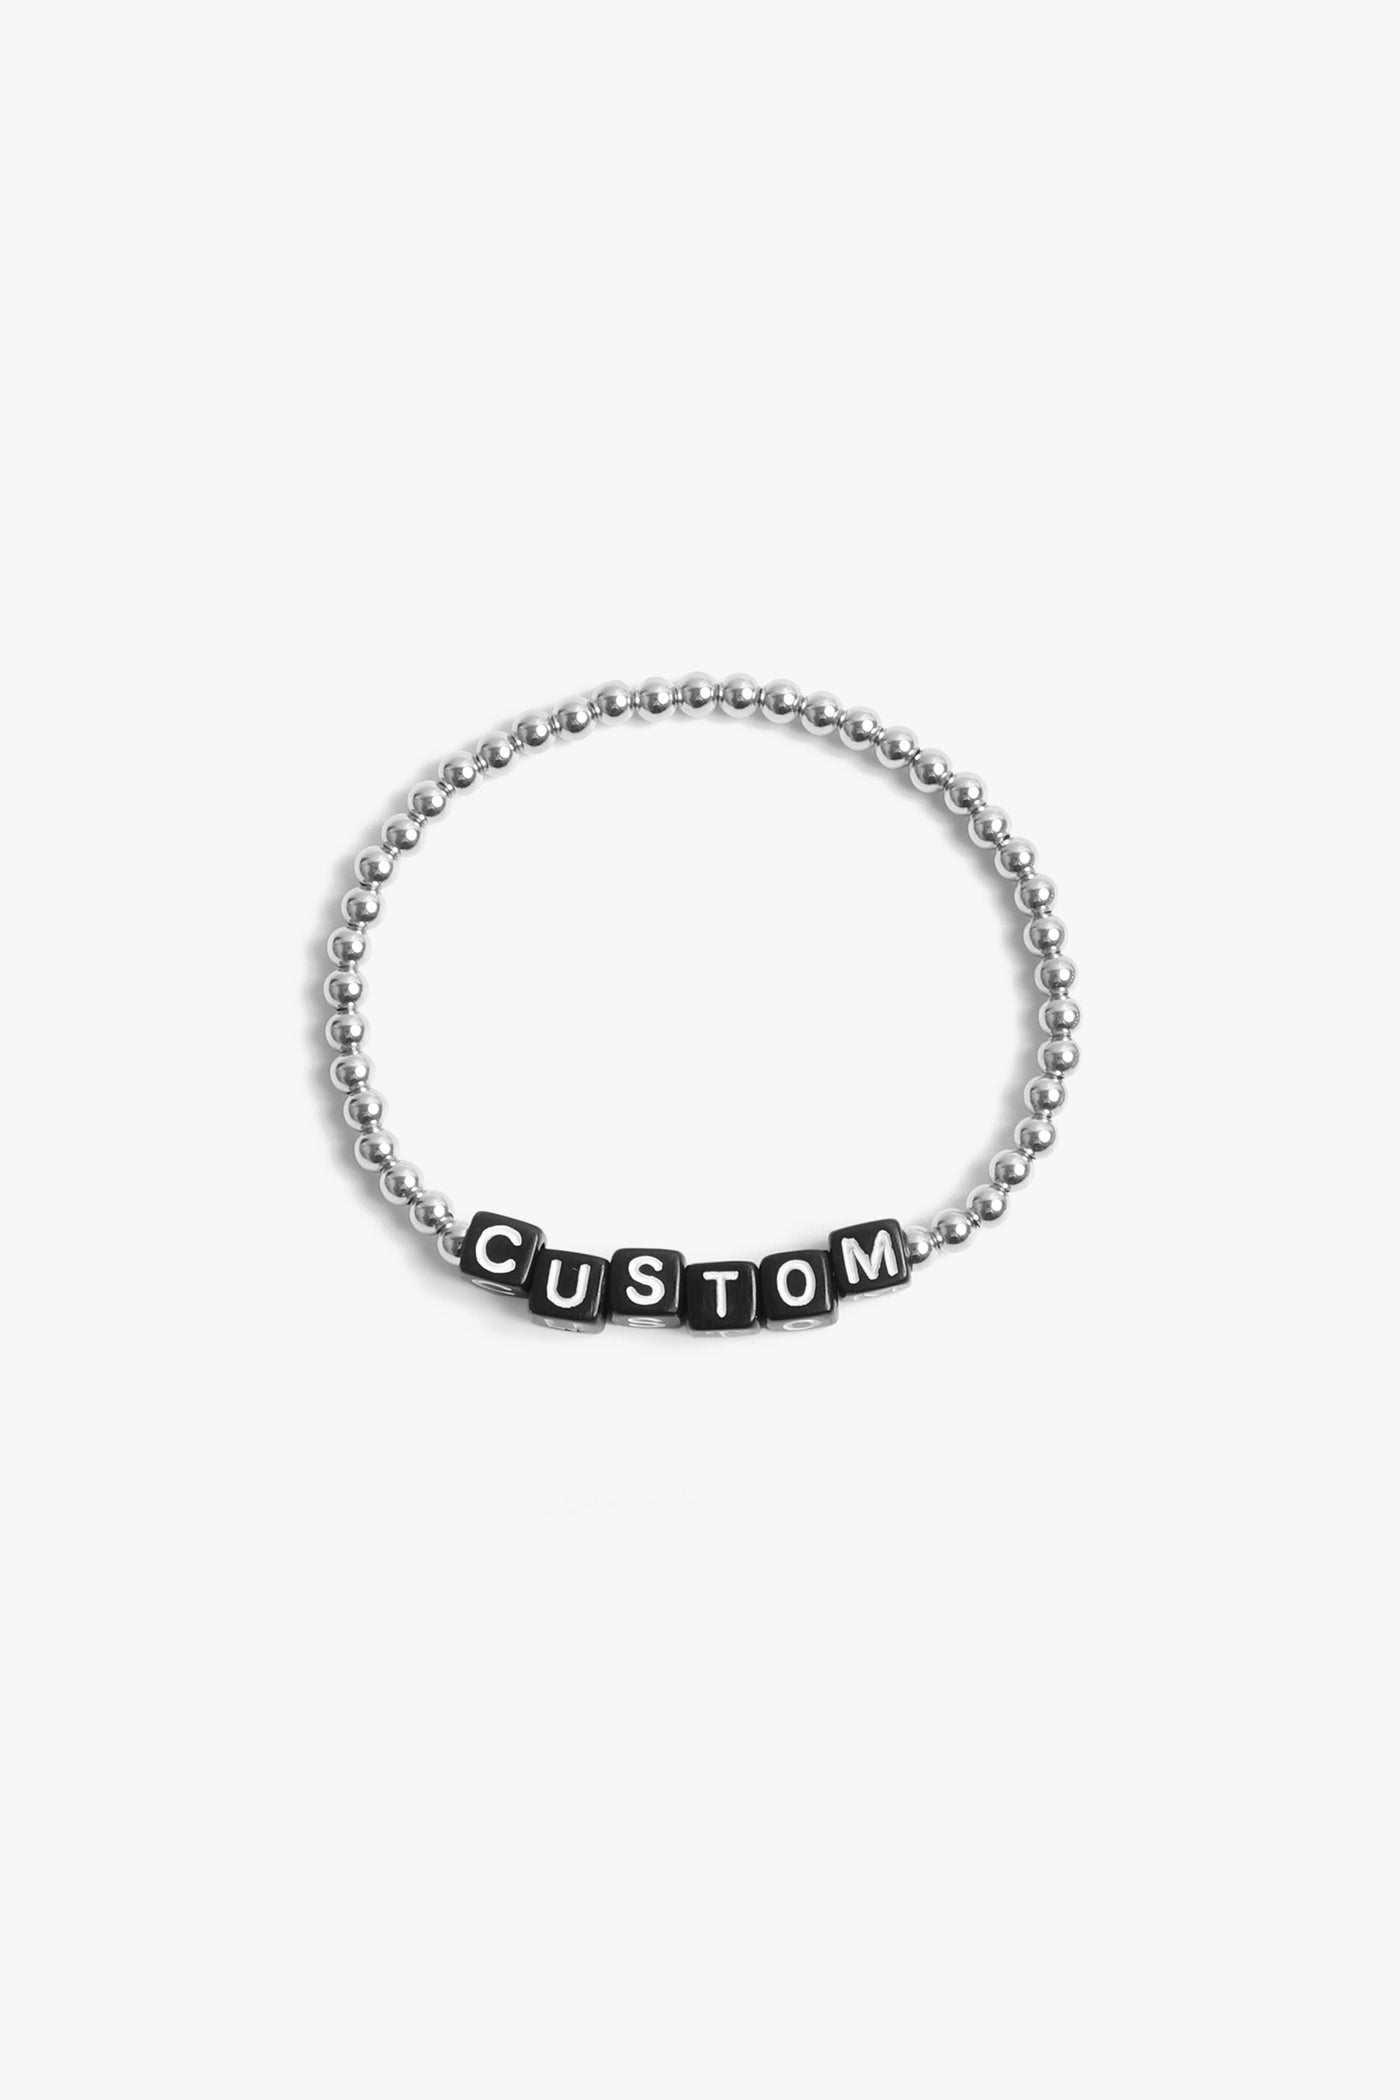 Marin Costello Jewelry Crown Letter Bracelet beaded block letter bracelet, customizable. Black block letters, silver beads. Waterproof, sustainable, hypoallergenic. Polished stainless steel.